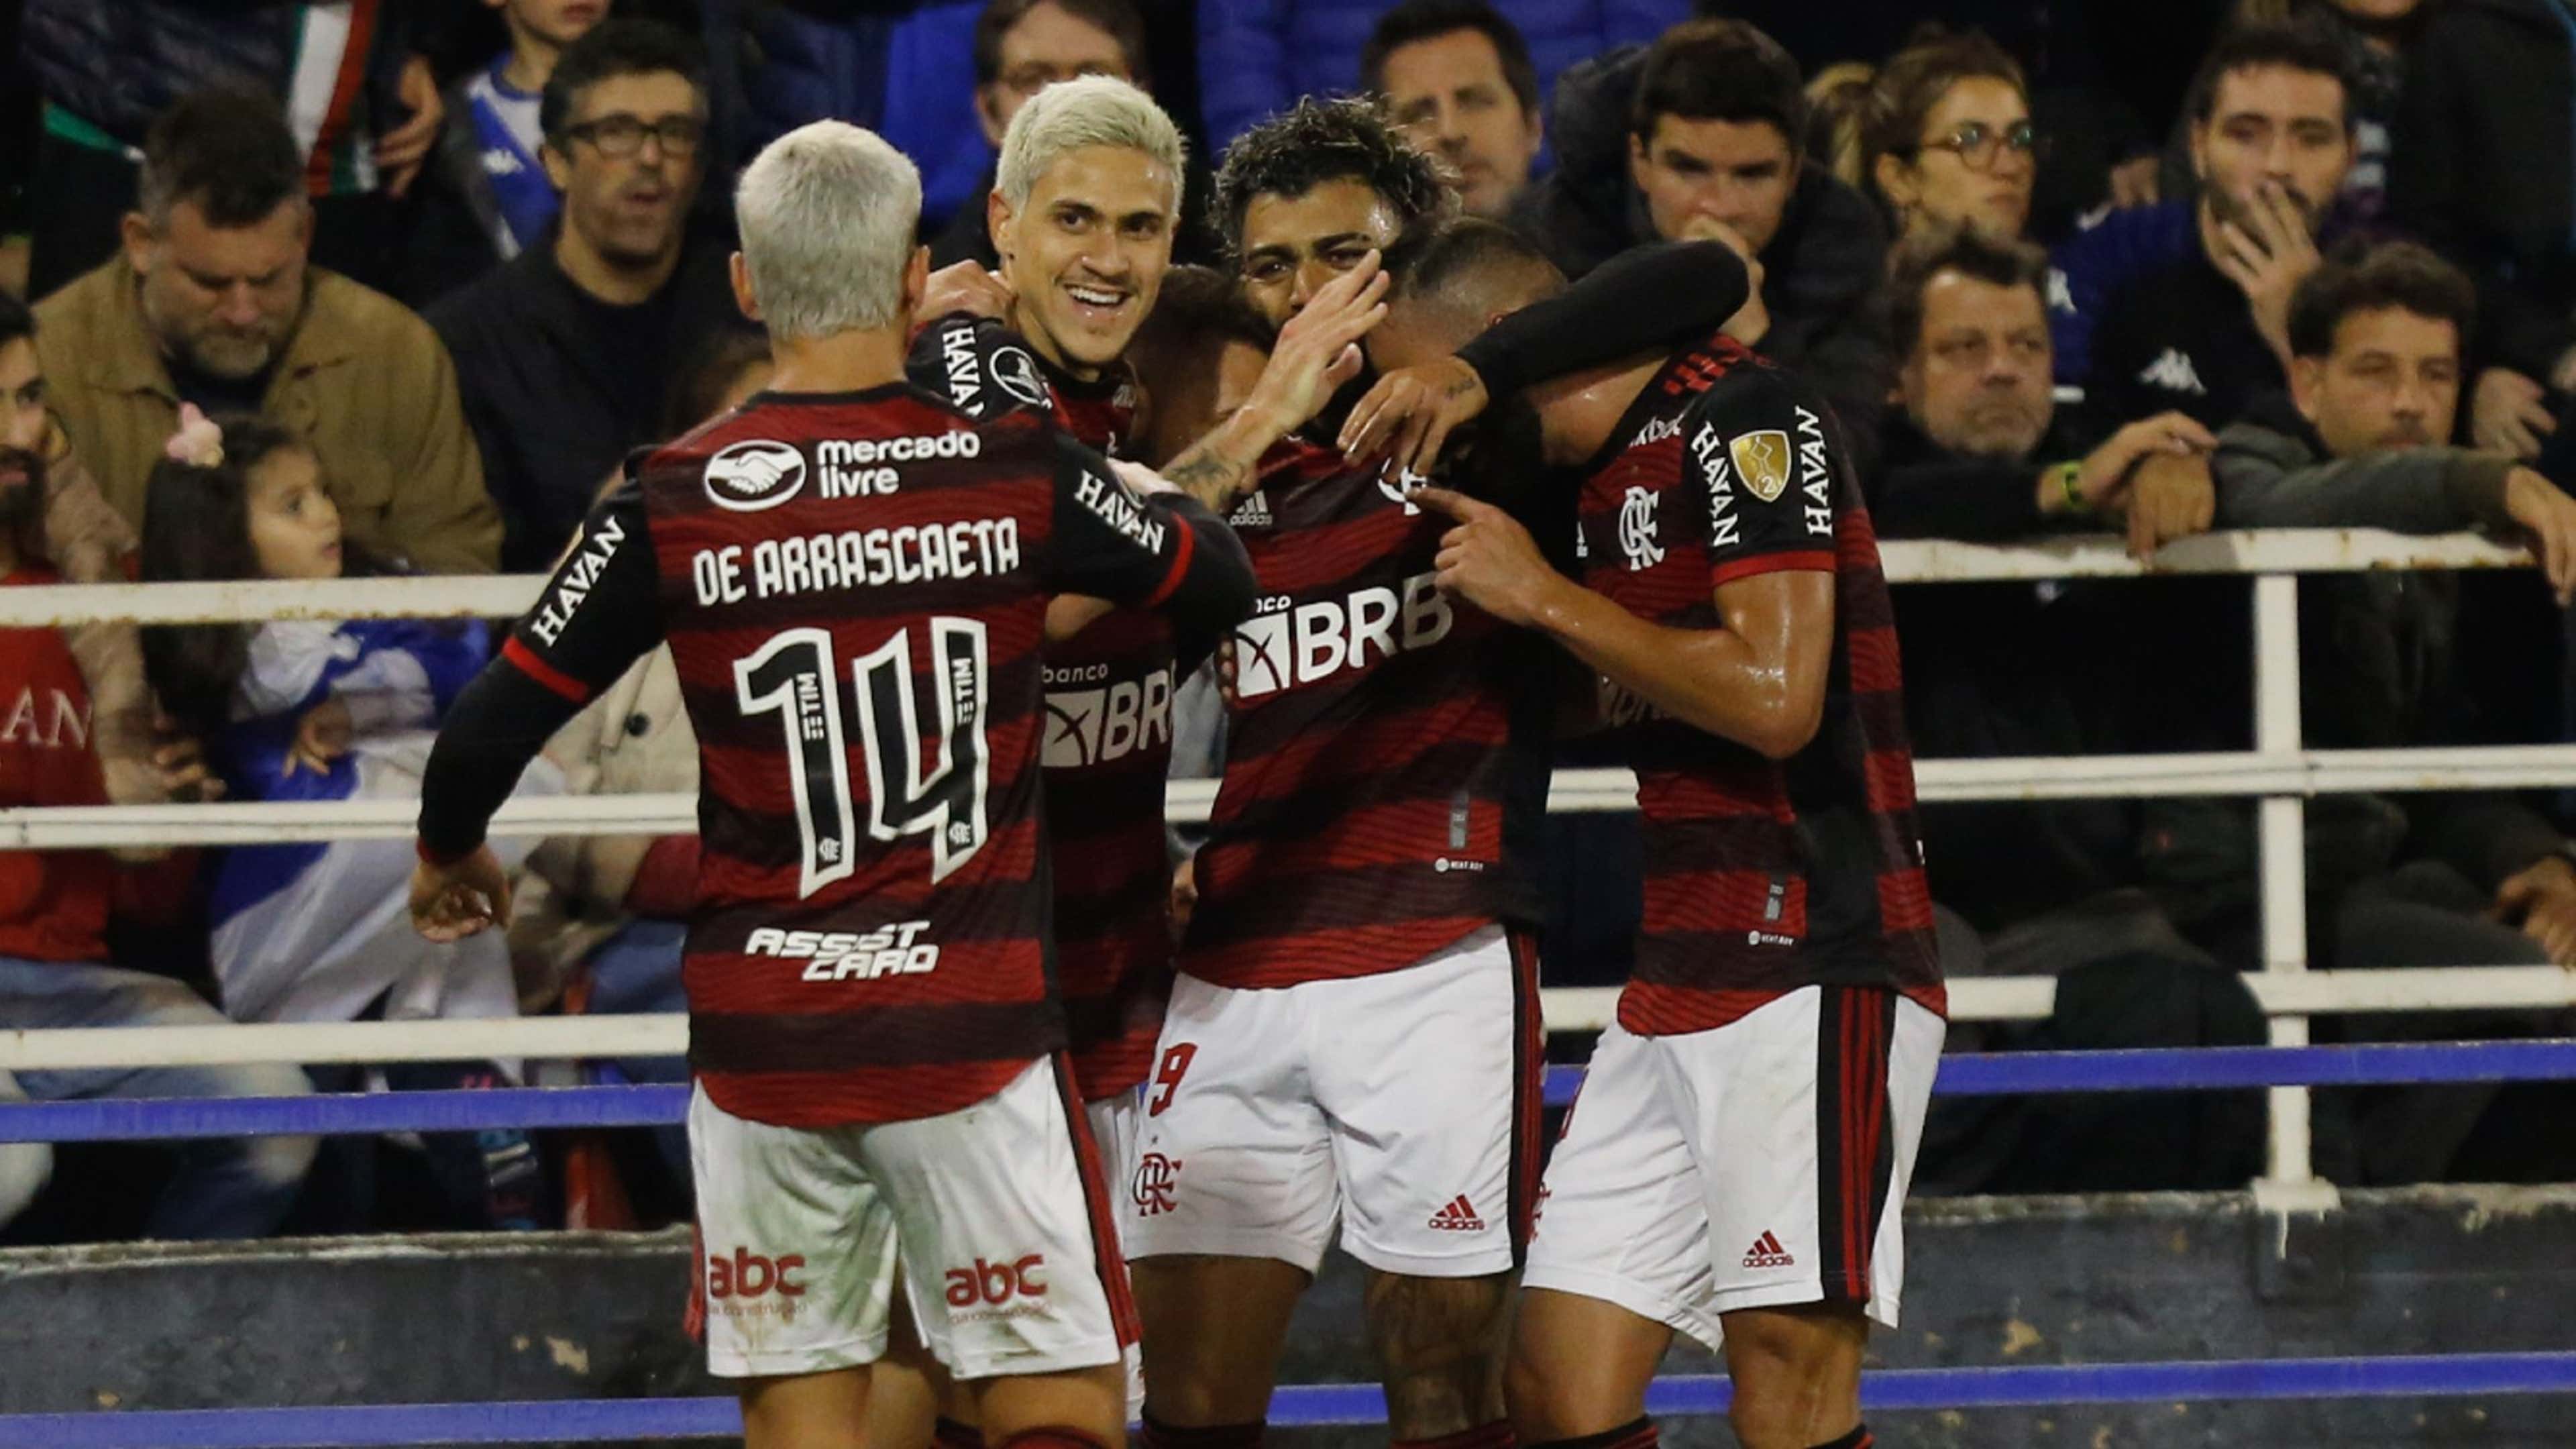 Tombense FC: A Rising Powerhouse in Brazilian Football